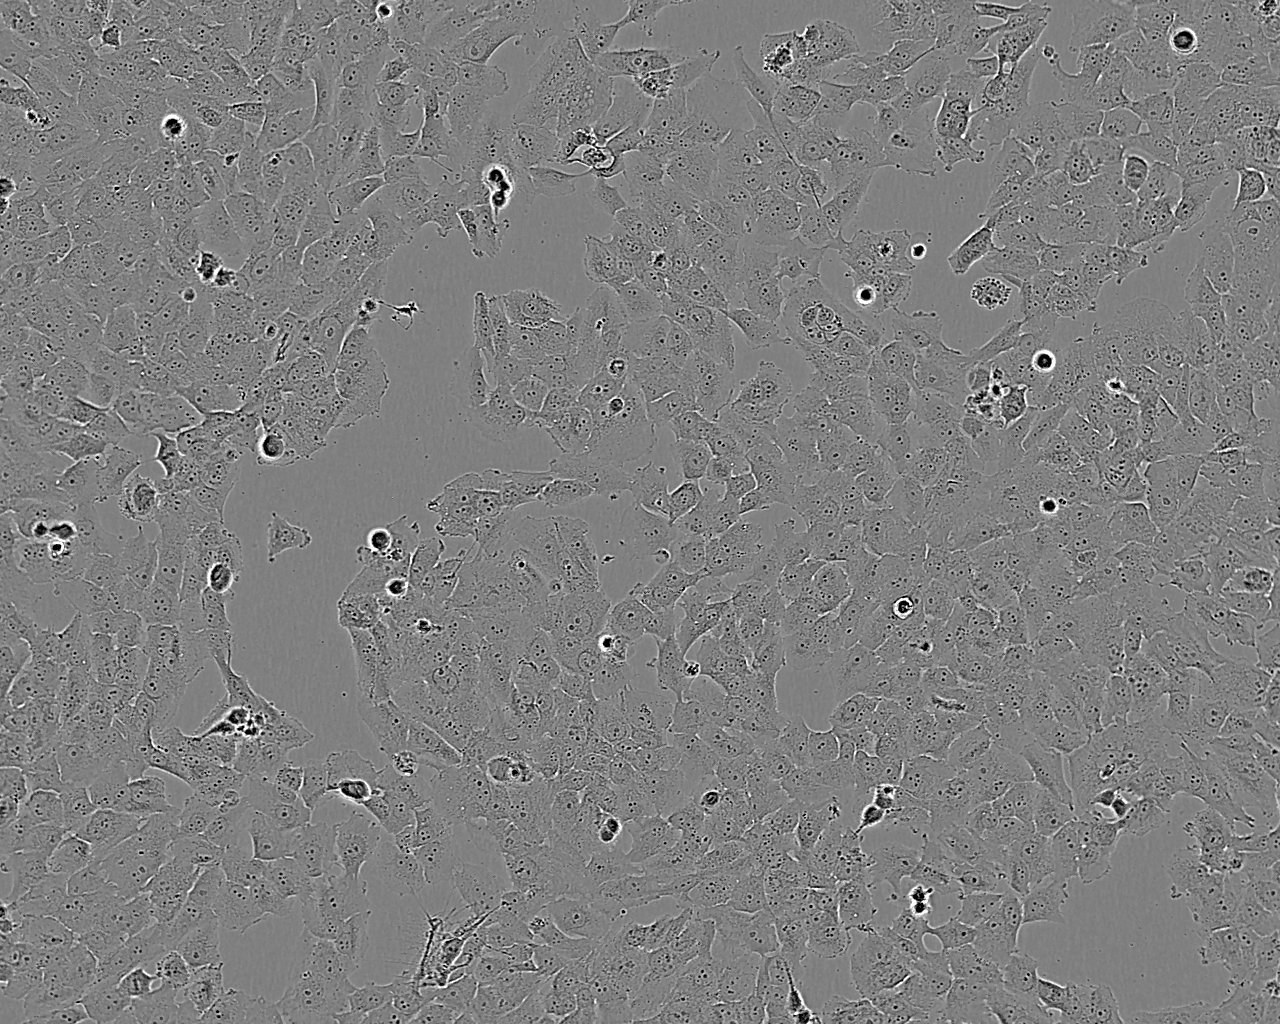 MKN1 epithelioid cells人胃癌细胞系,MKN1 epithelioid cells